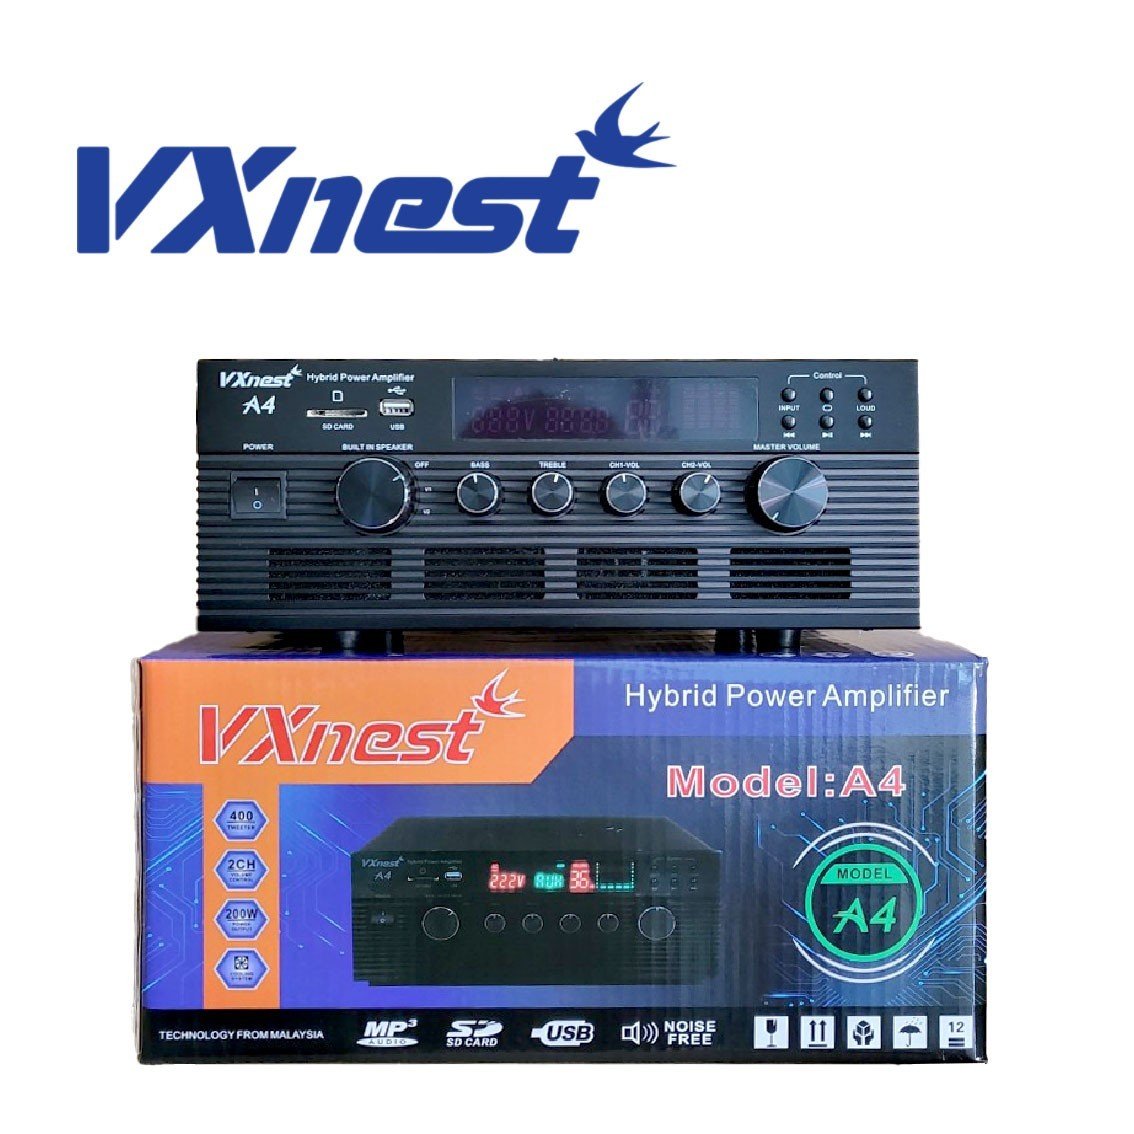 Amplifier Vxnest A4, nhập khẩu Malaysia